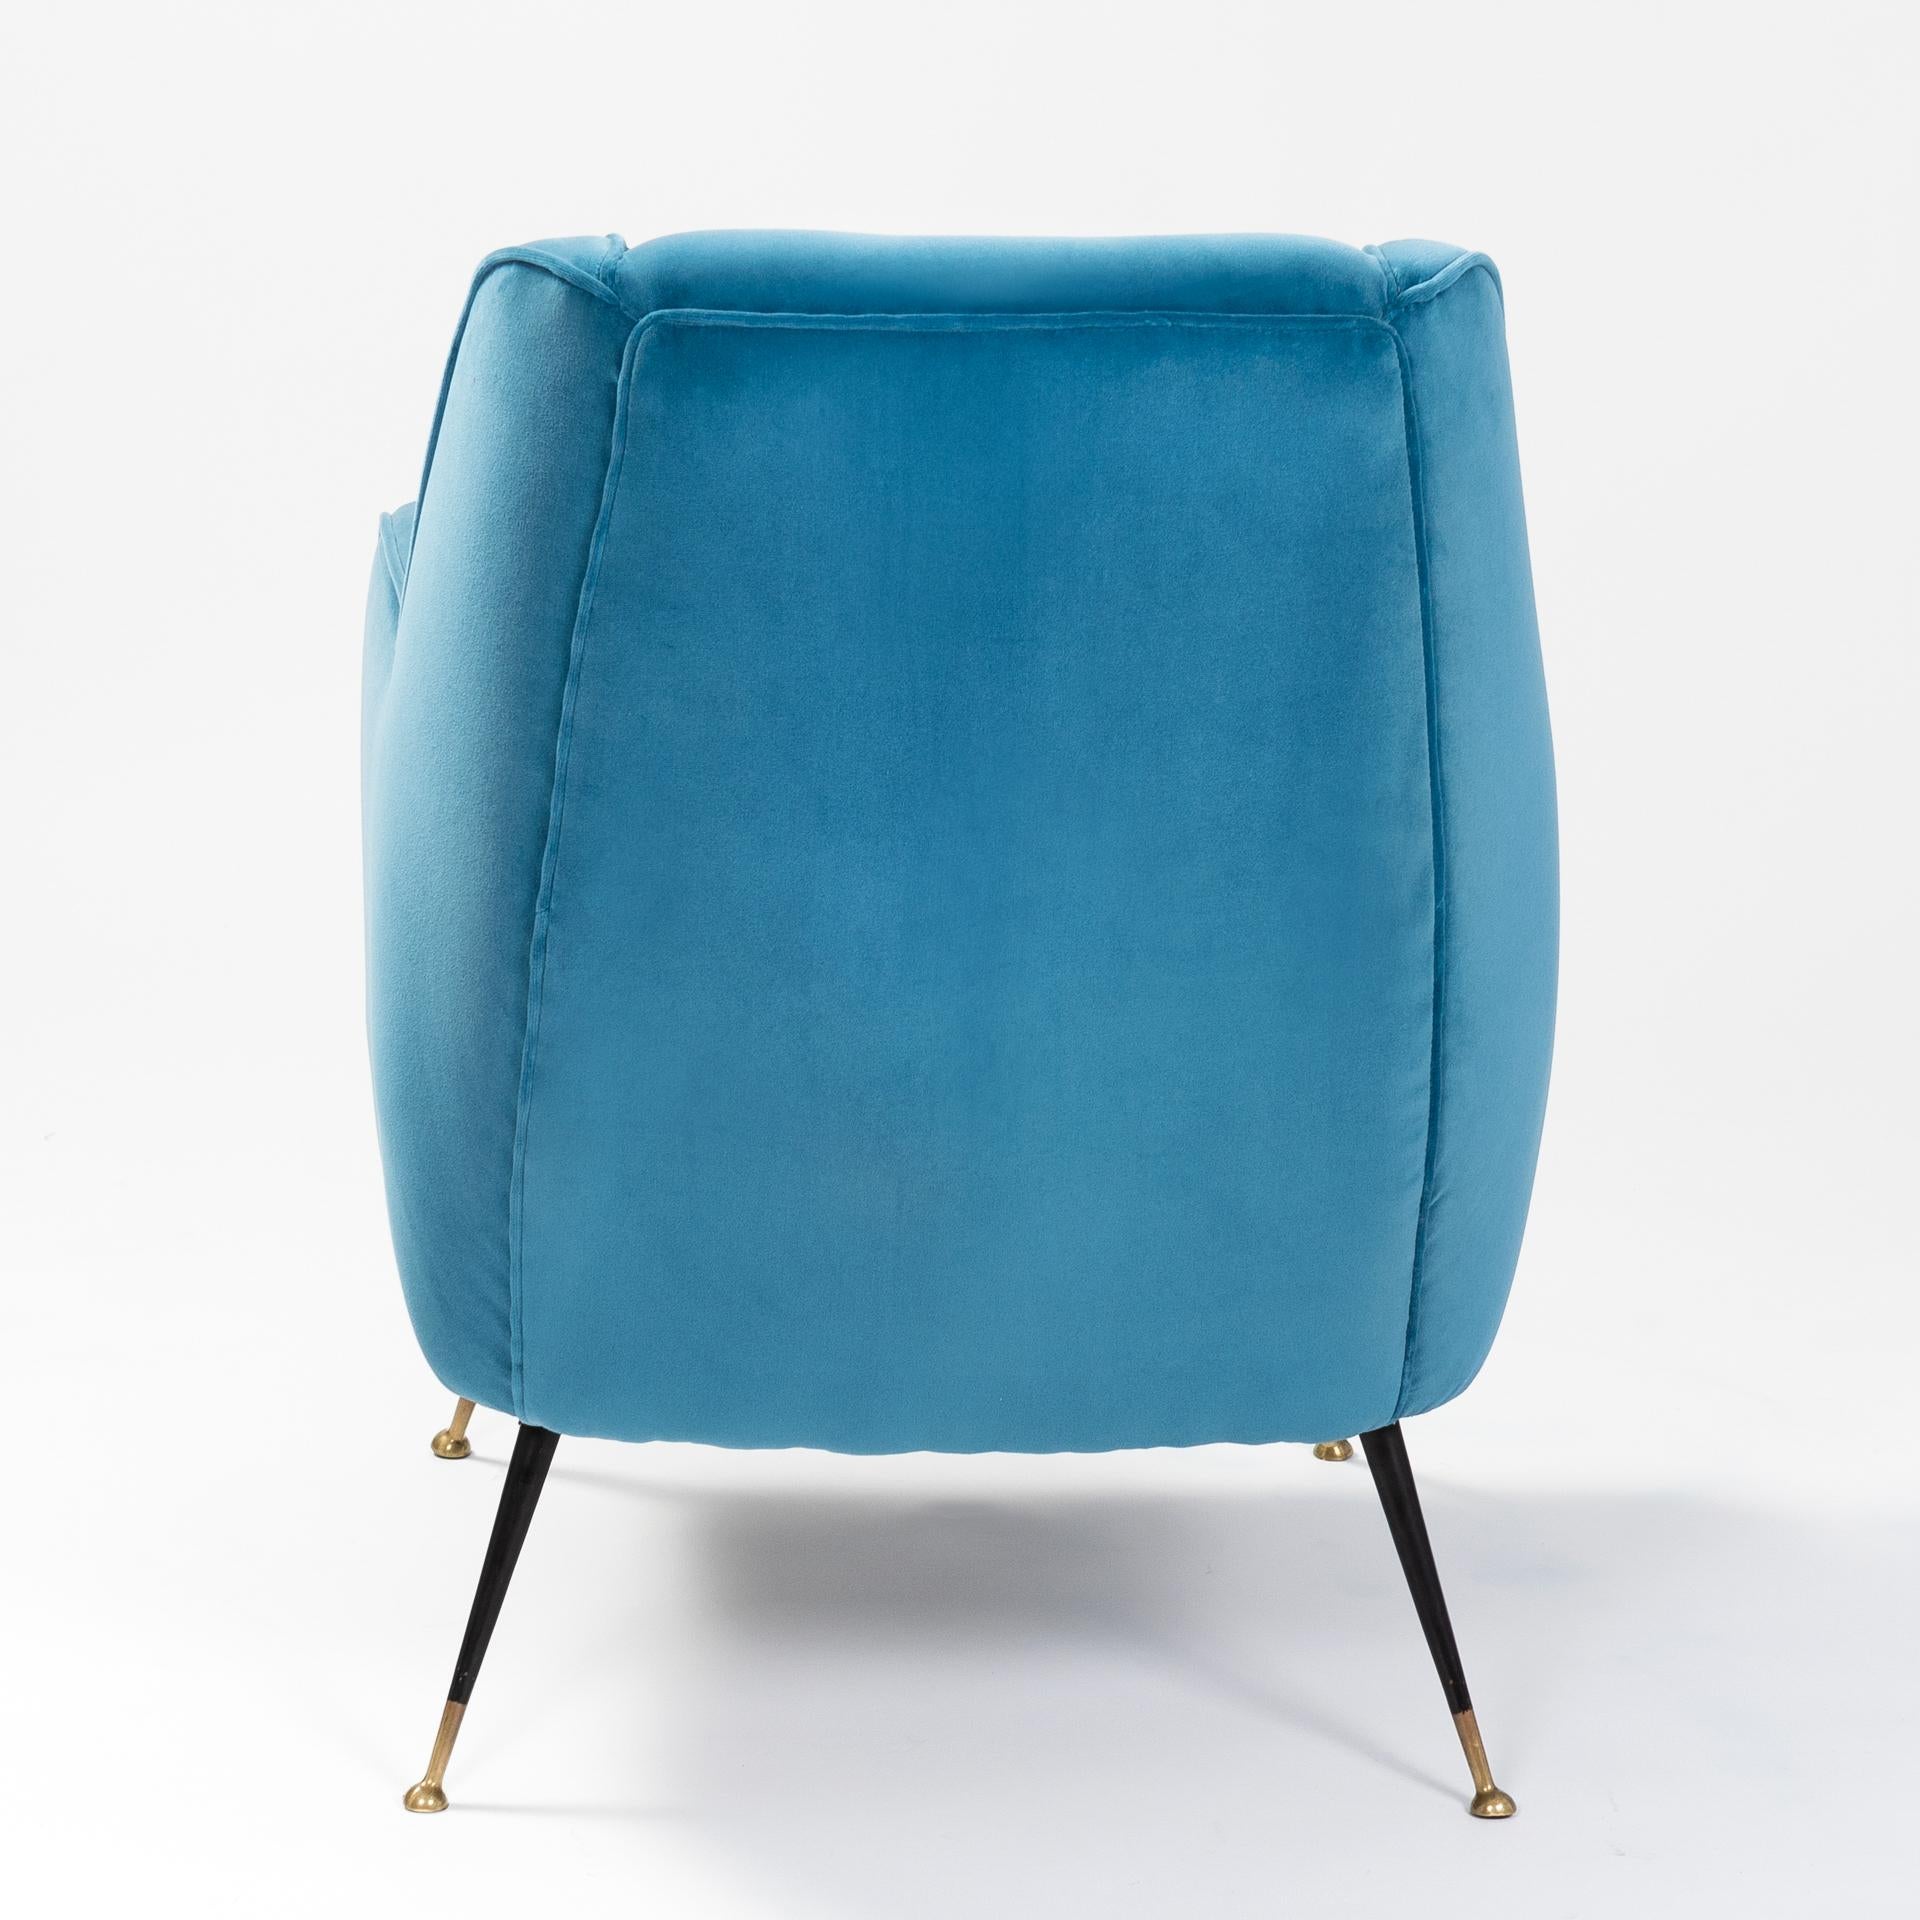 Mid-Century Modern Pair of Italian Midcentury Armchairs Re-Upholsterd in Turquoise Colored Velvet